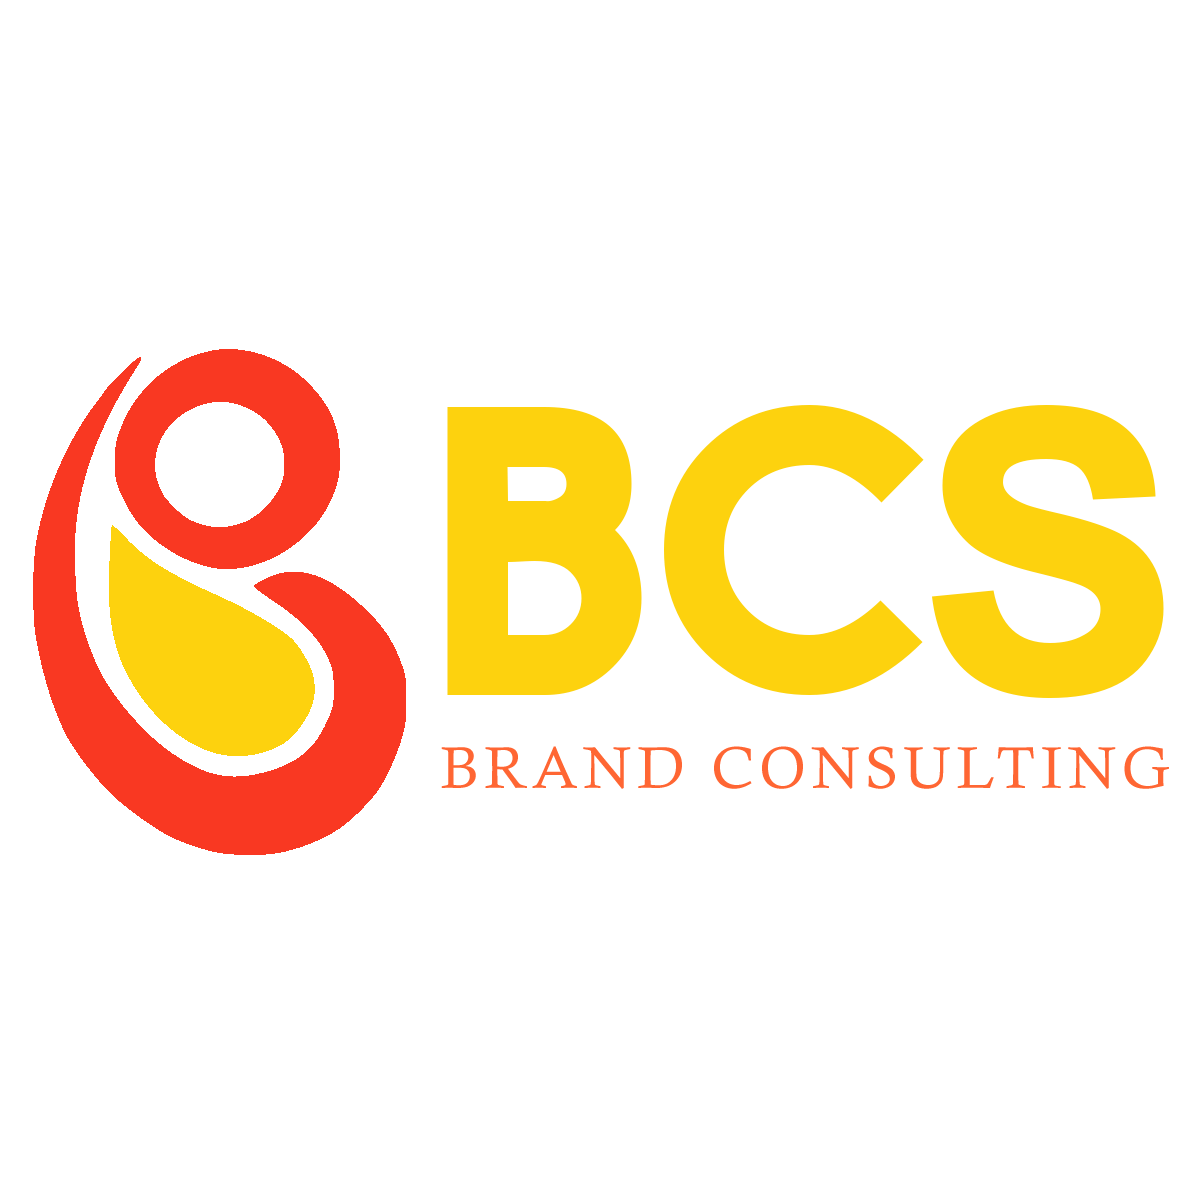 BCS Brand Consulting